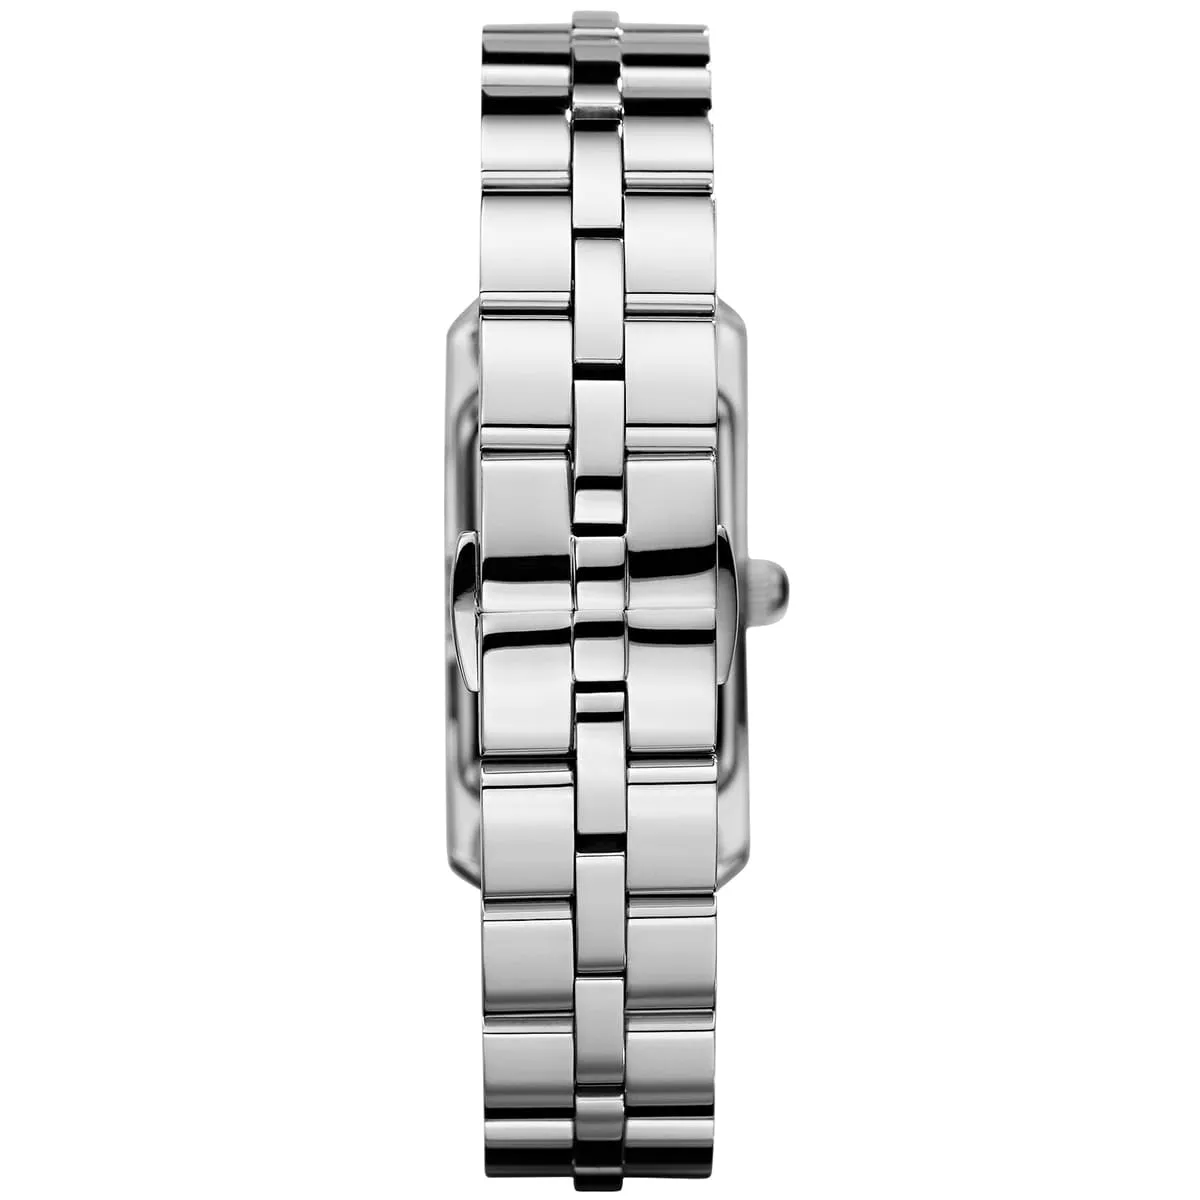 ARMANI EXCHANGE AX7102 BLACK WATCH & BRACELET GIFT SET - BLACK.  #armaniexchange # | Black watch bracelet, Luxury gifts for men, Leather watch  bracelet